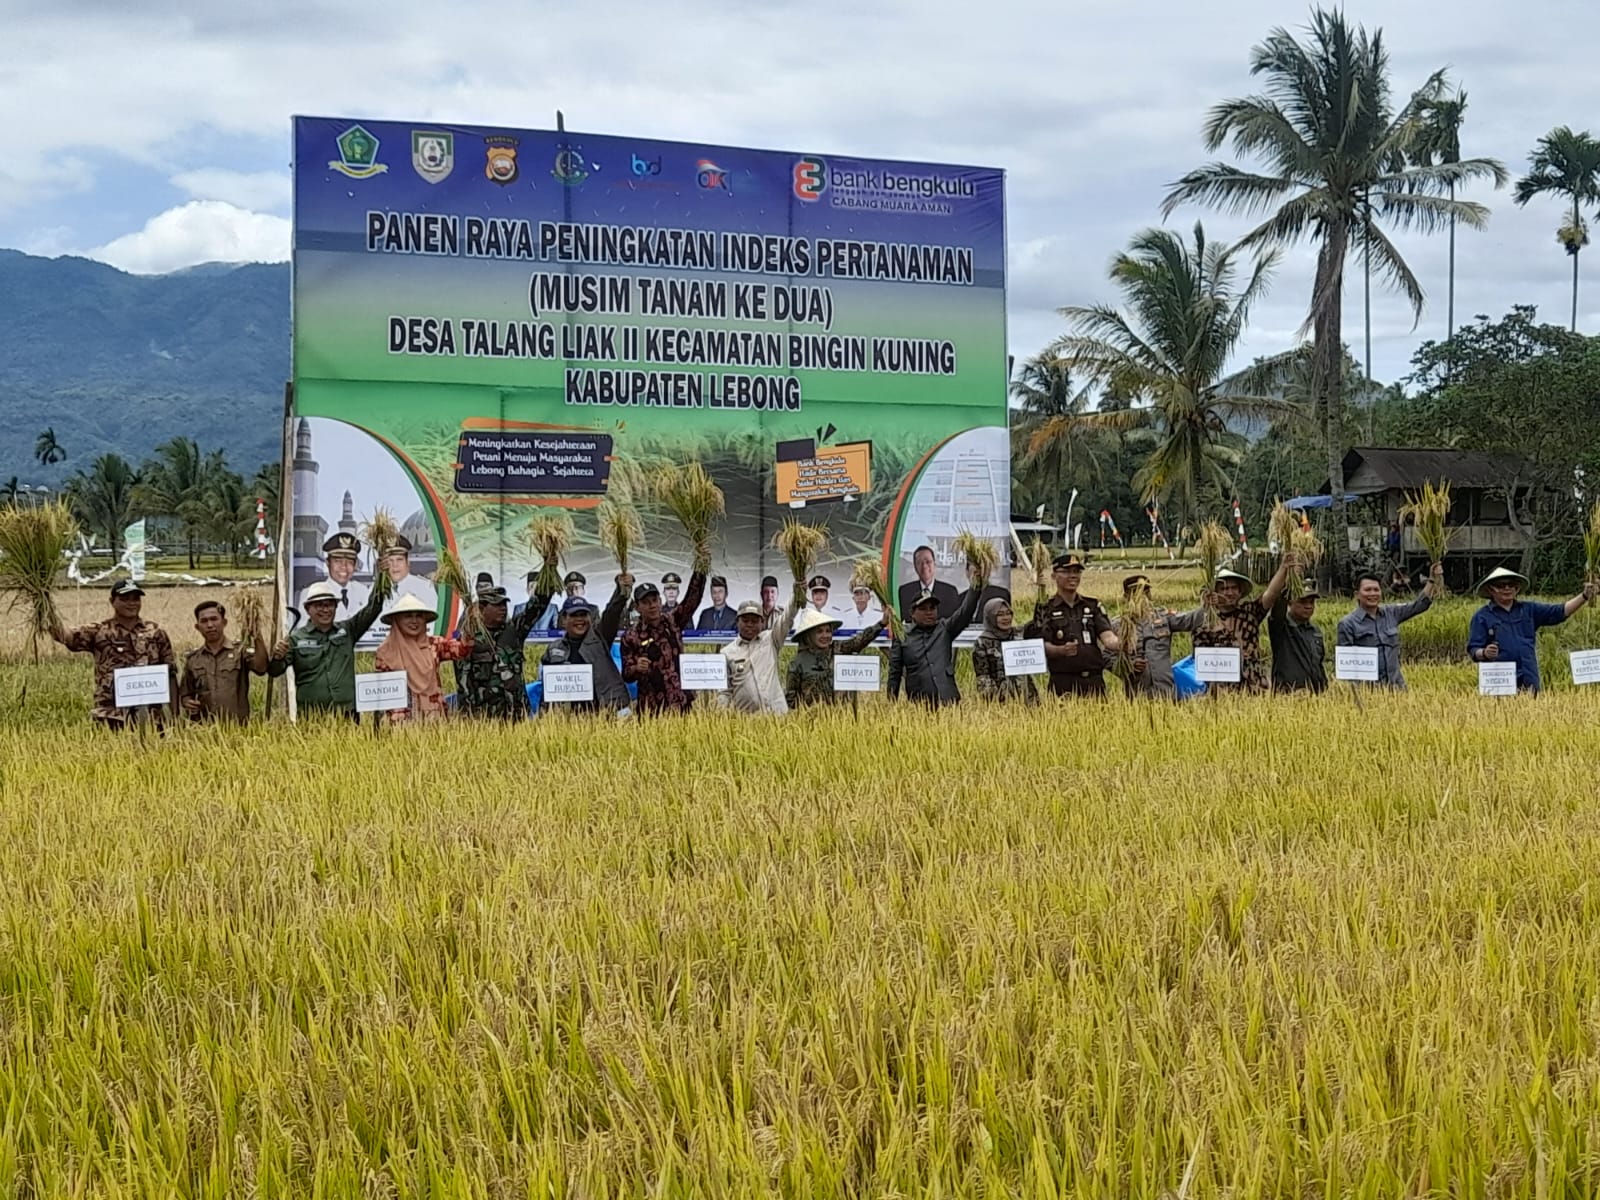 Dukung MT II di Lebong, Berikut Bantuan yang Dijanjikan untuk Petani  